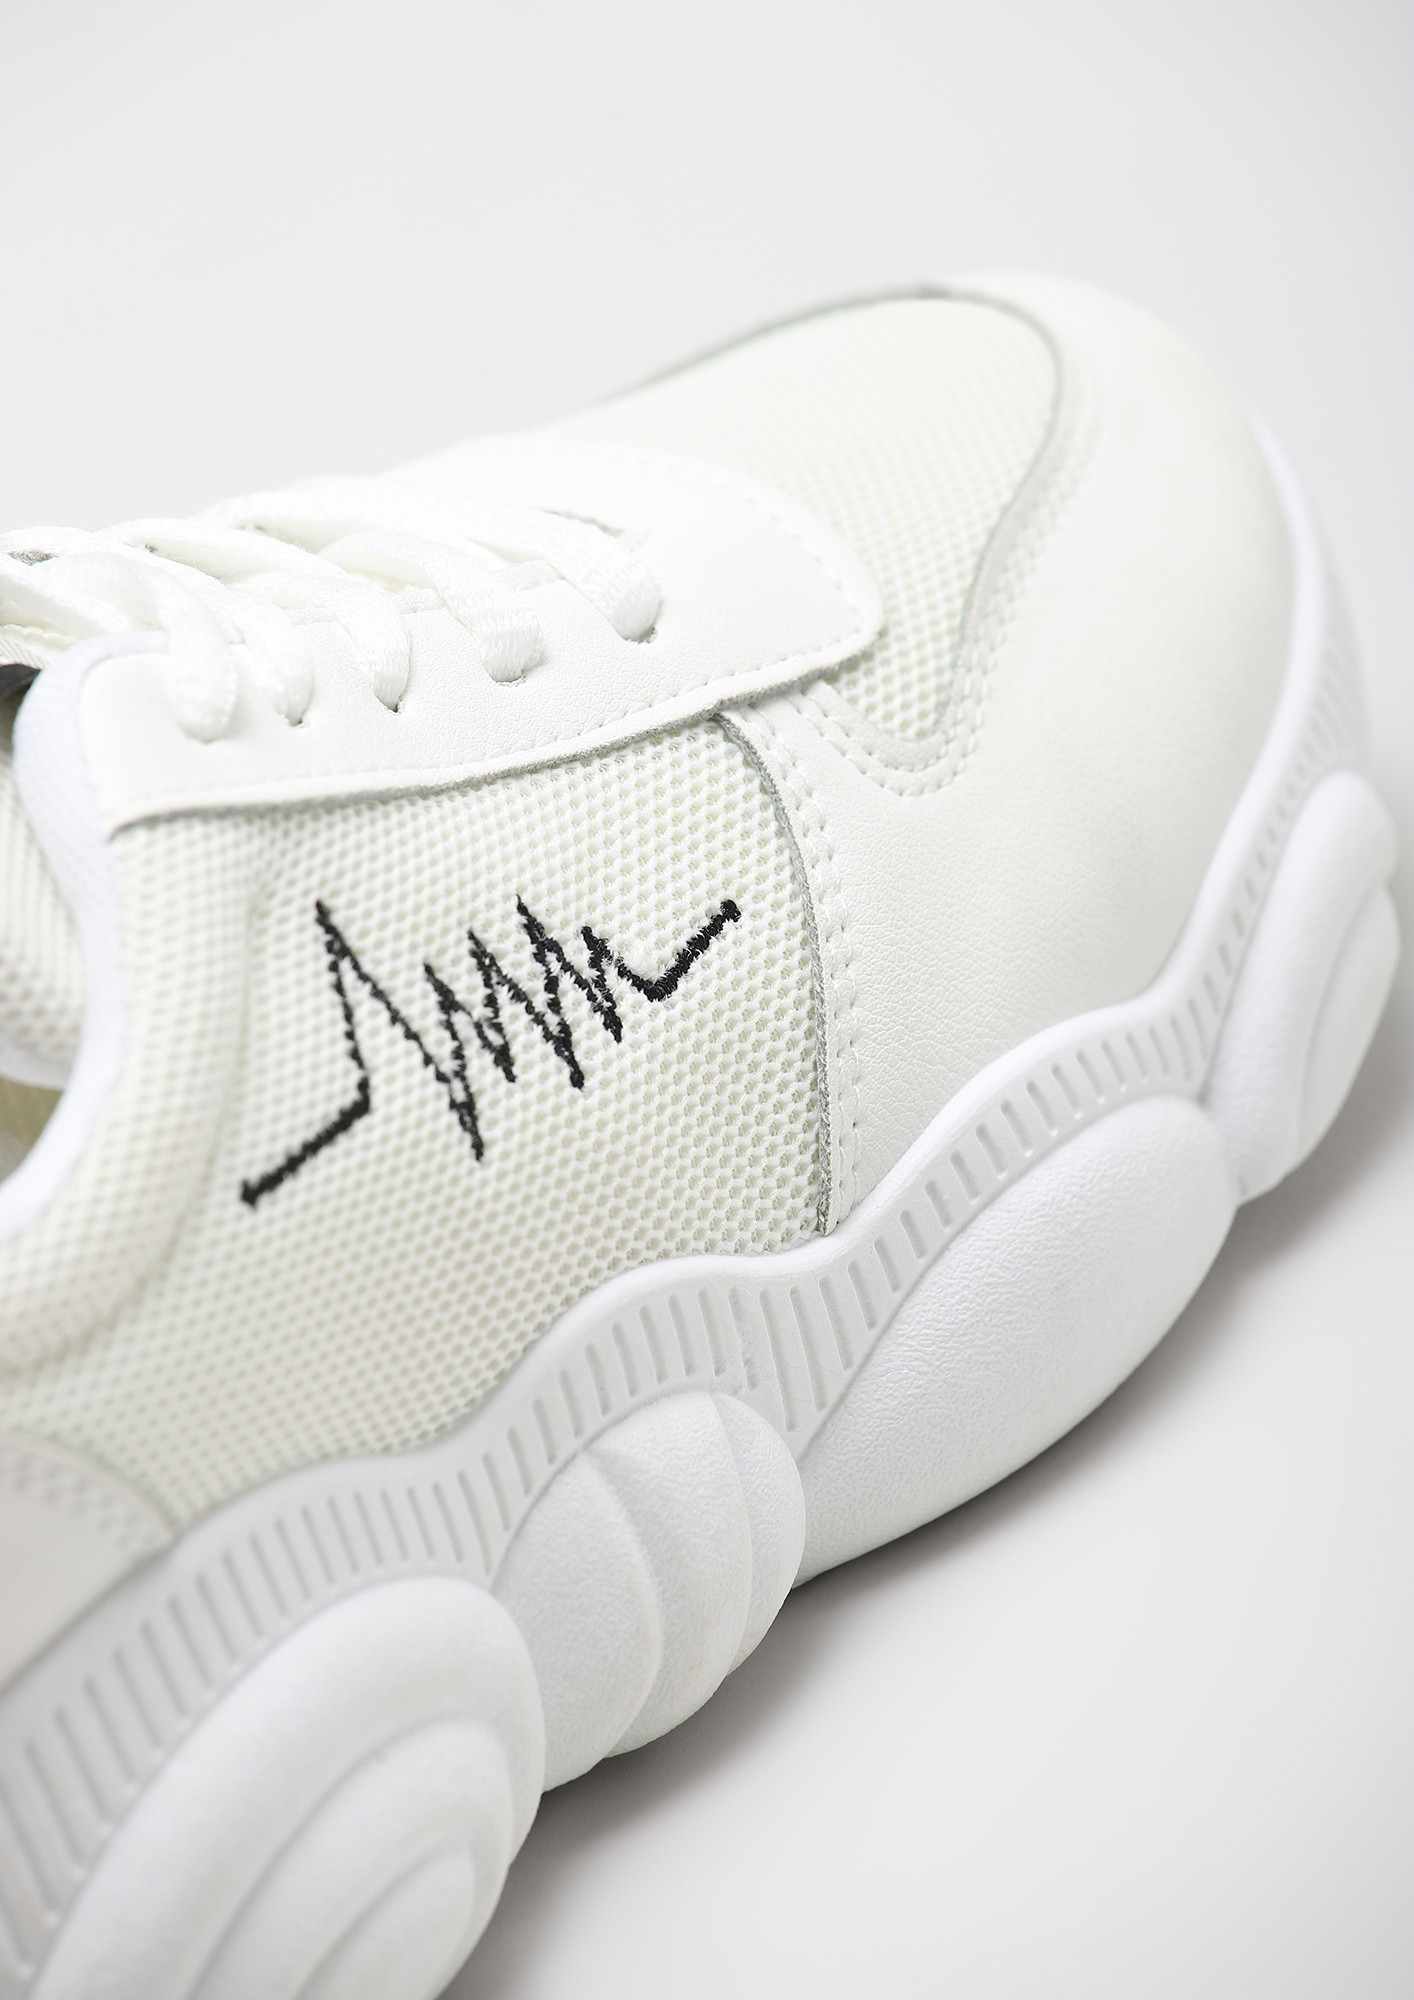 Nike Zoom Gravity Sneaker Womens's Size 8 Platinum Tint 2019 BQ3203-001 |  eBay